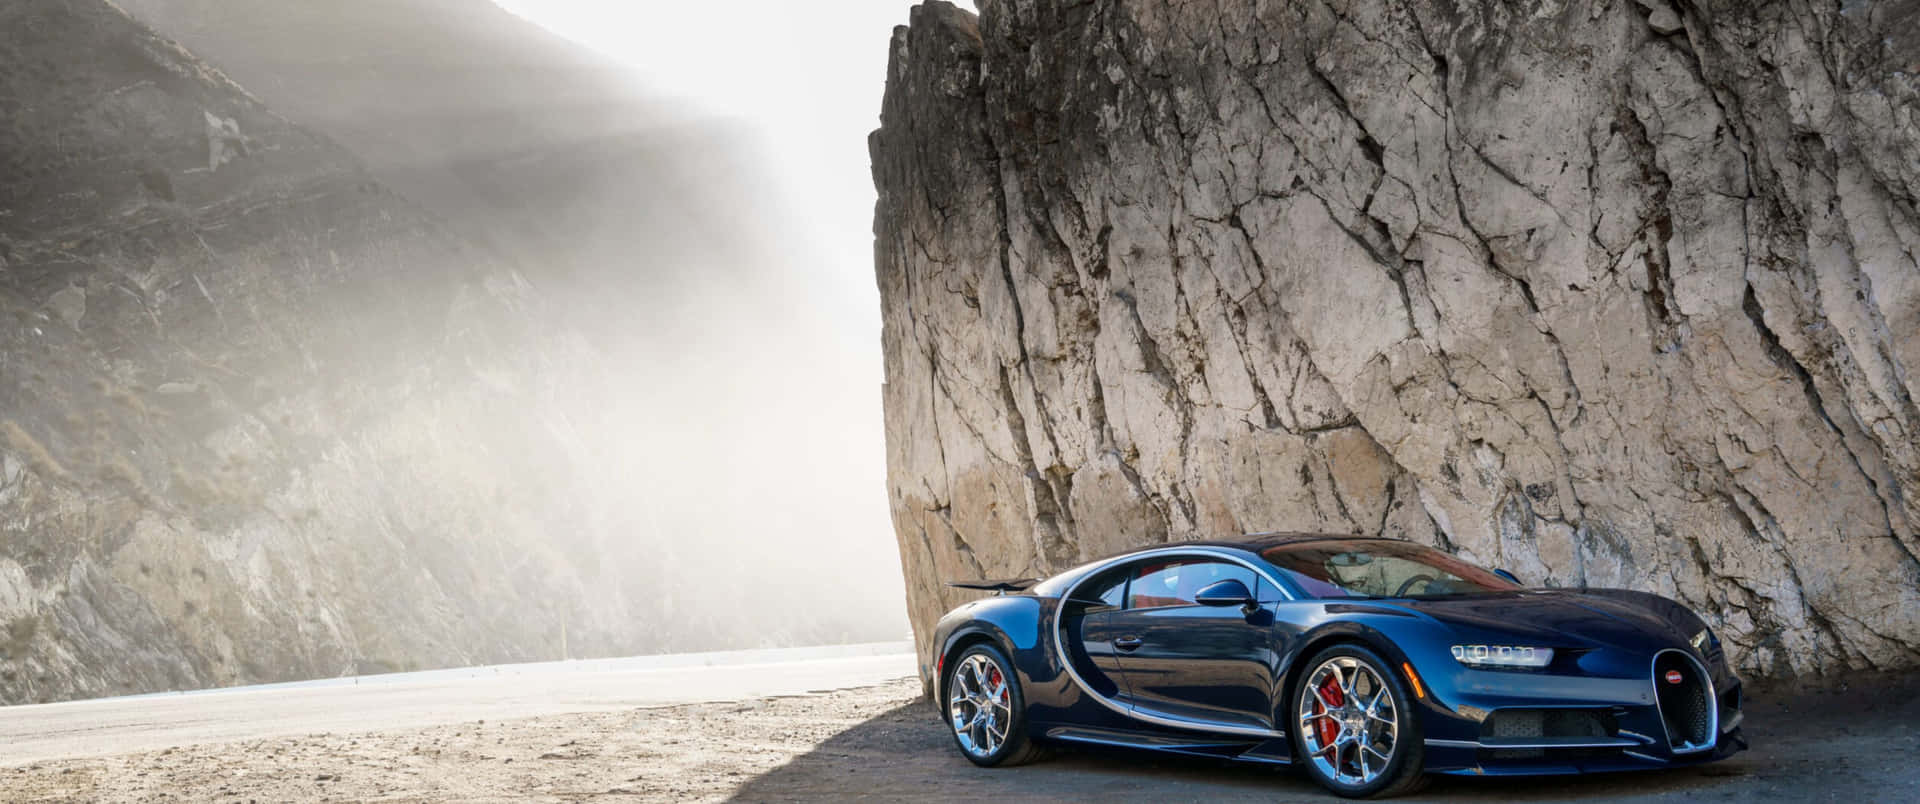 Supercharged power of the Bugatti Chiron.